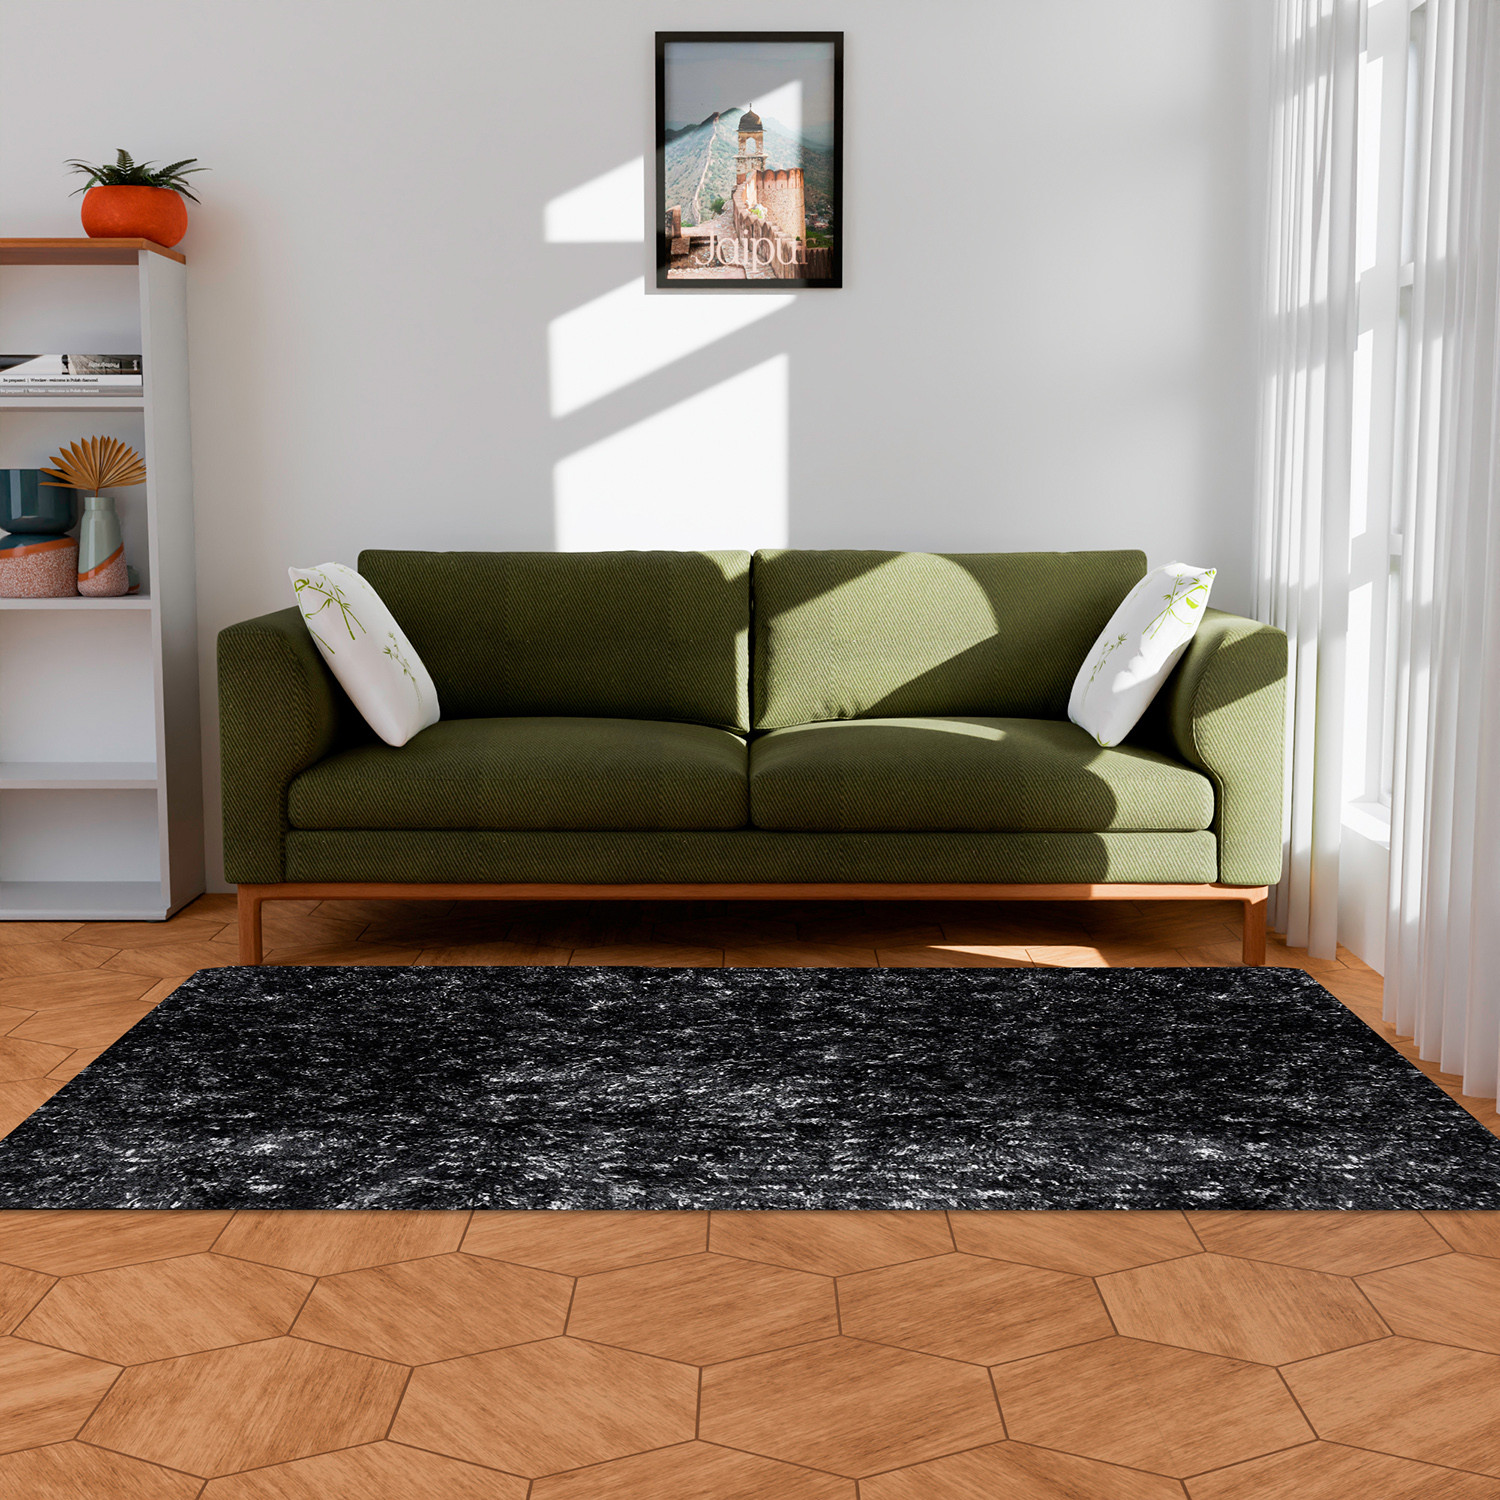 Kuber Industries Carpet | Shaggy Carpet for Living Room | Fluffy Door Mat | Lexus Home Decor Carpet & Door Mat Combo | Floor Carpet Rug & Door Mat Set | Set of 2 | Gray